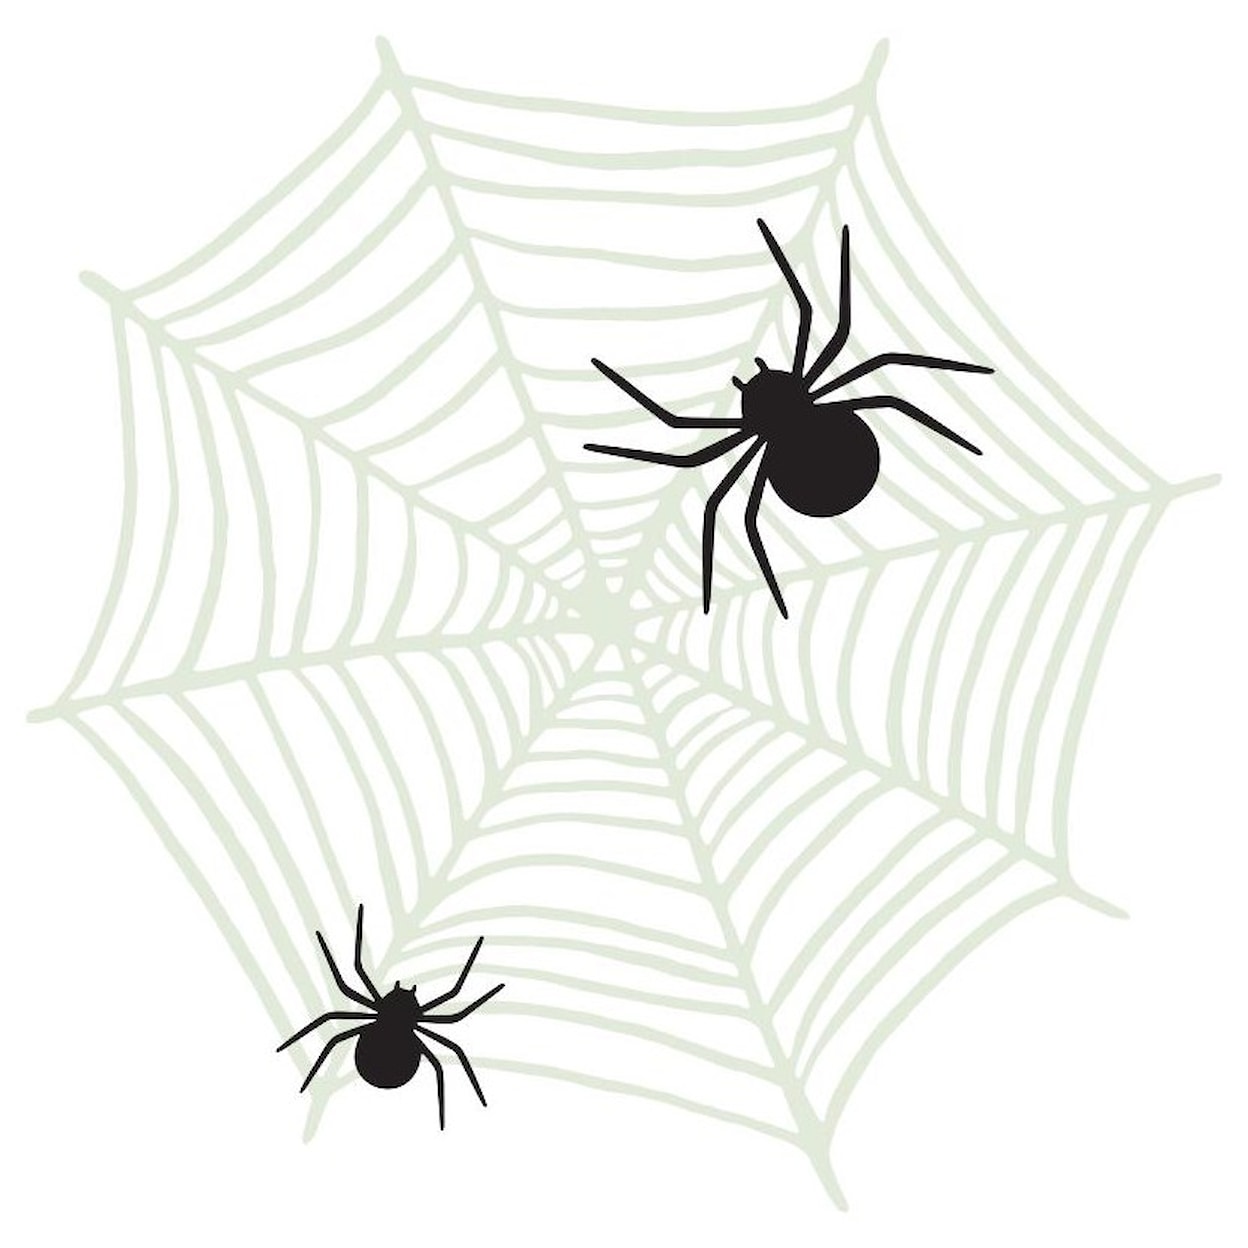 Tempaper Wall Decals Spider Webs